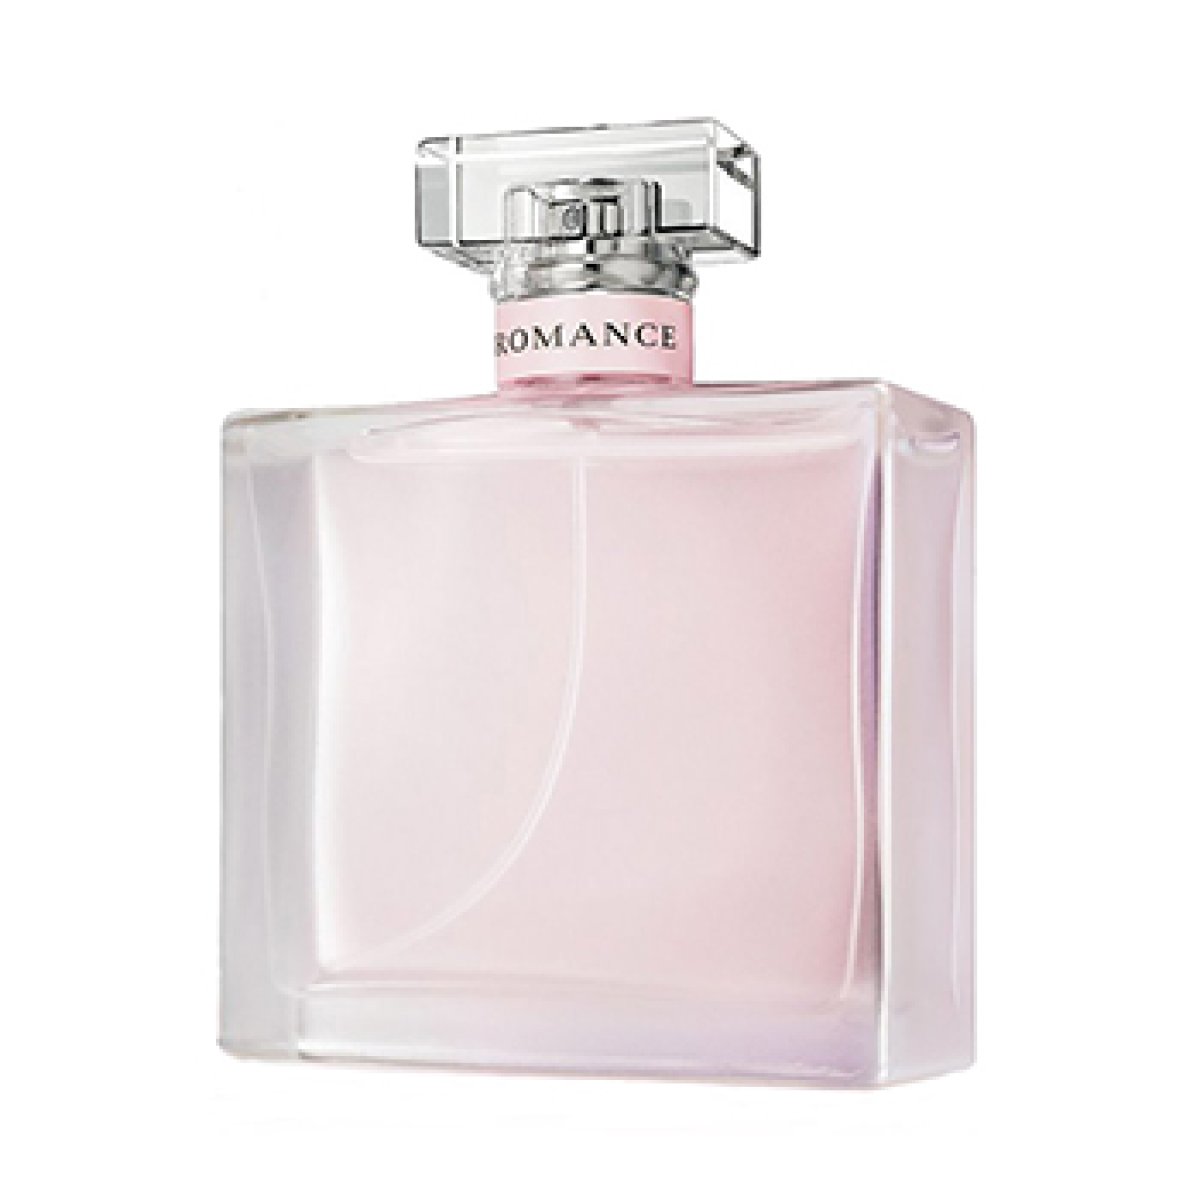 Ralph Lauren Romance Eau de Parfum Spray for Women - 1 fl oz bottle